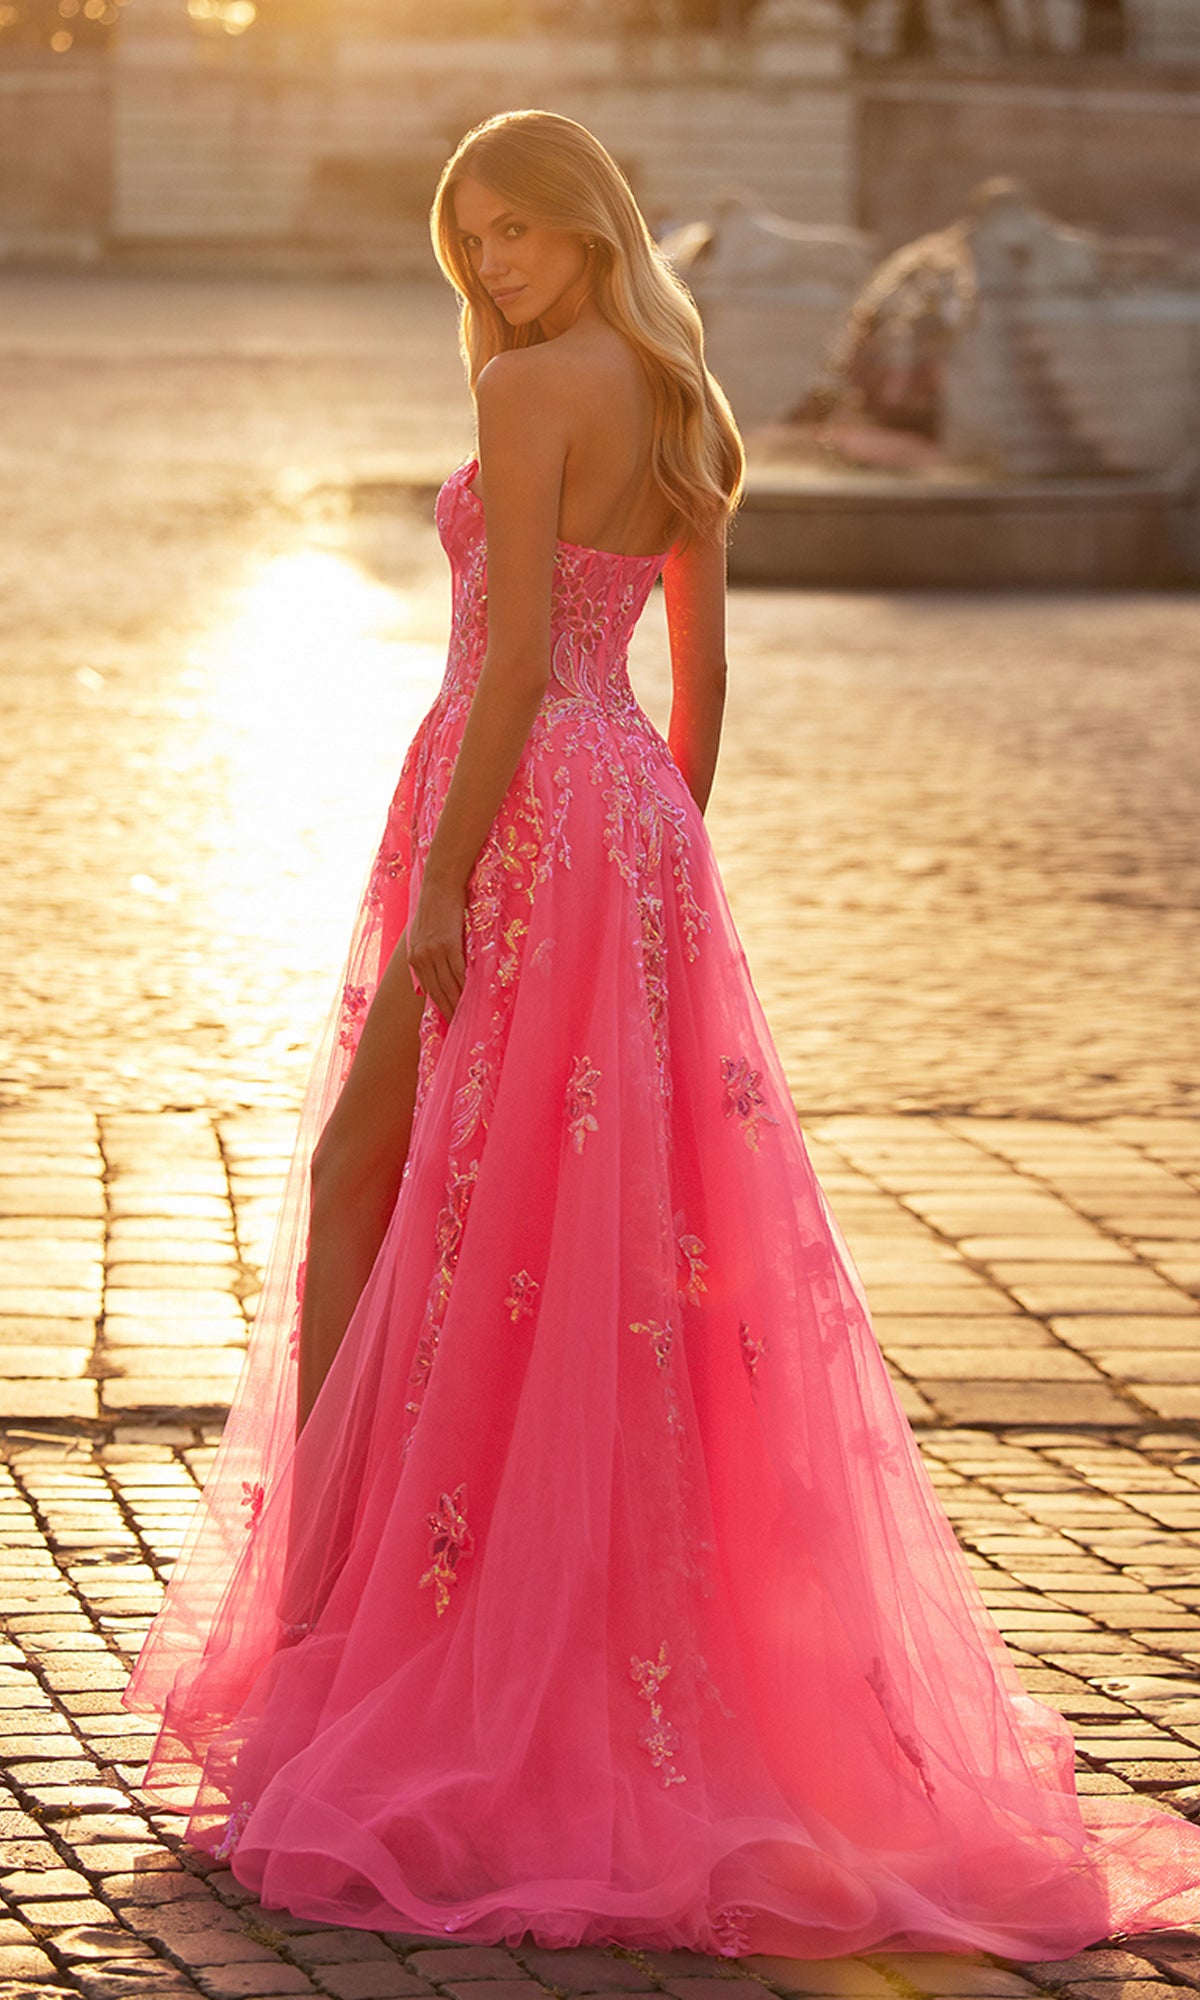 La Femme Long Prom Dress 32137